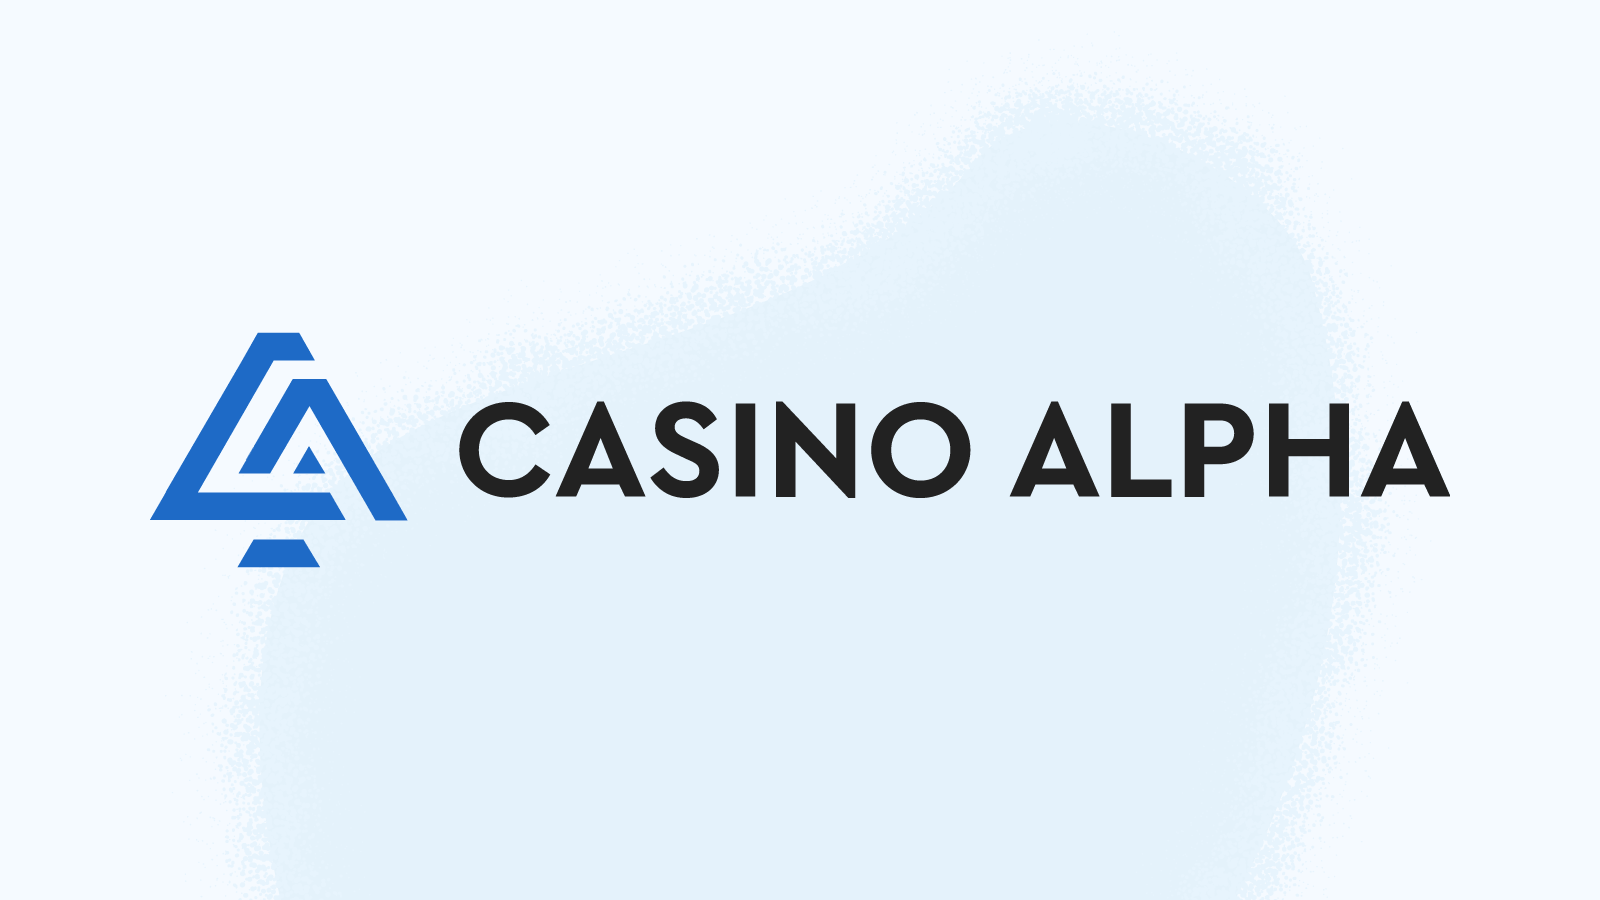 CasinoAlpha’s role in the Irish online casino industry